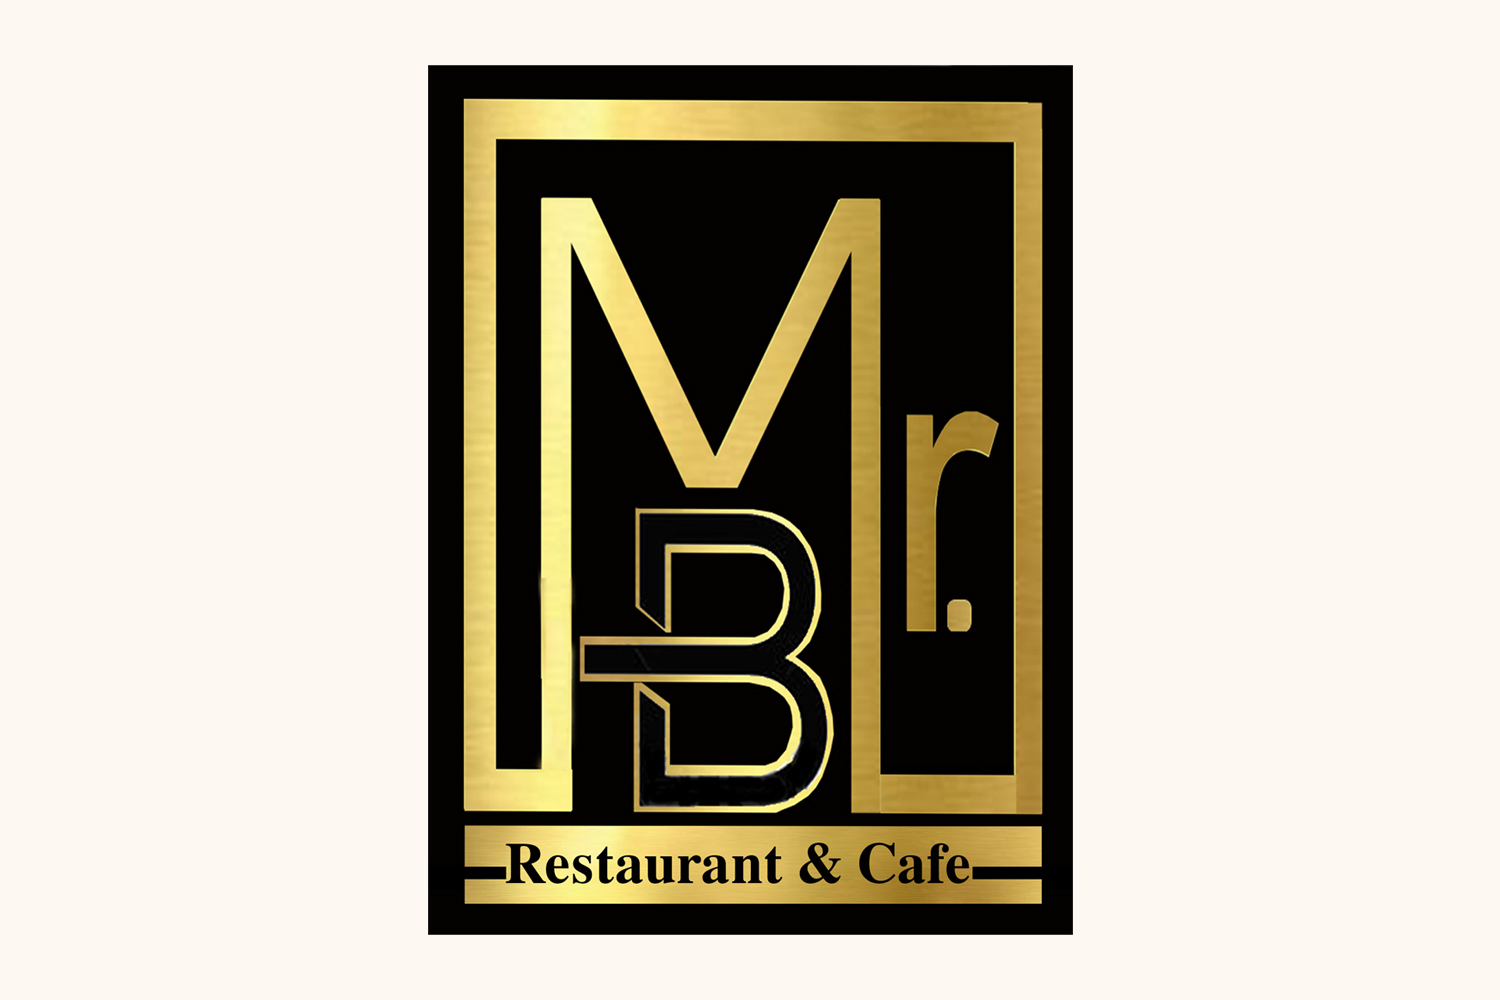 Mr. B Restaurant & Cafe